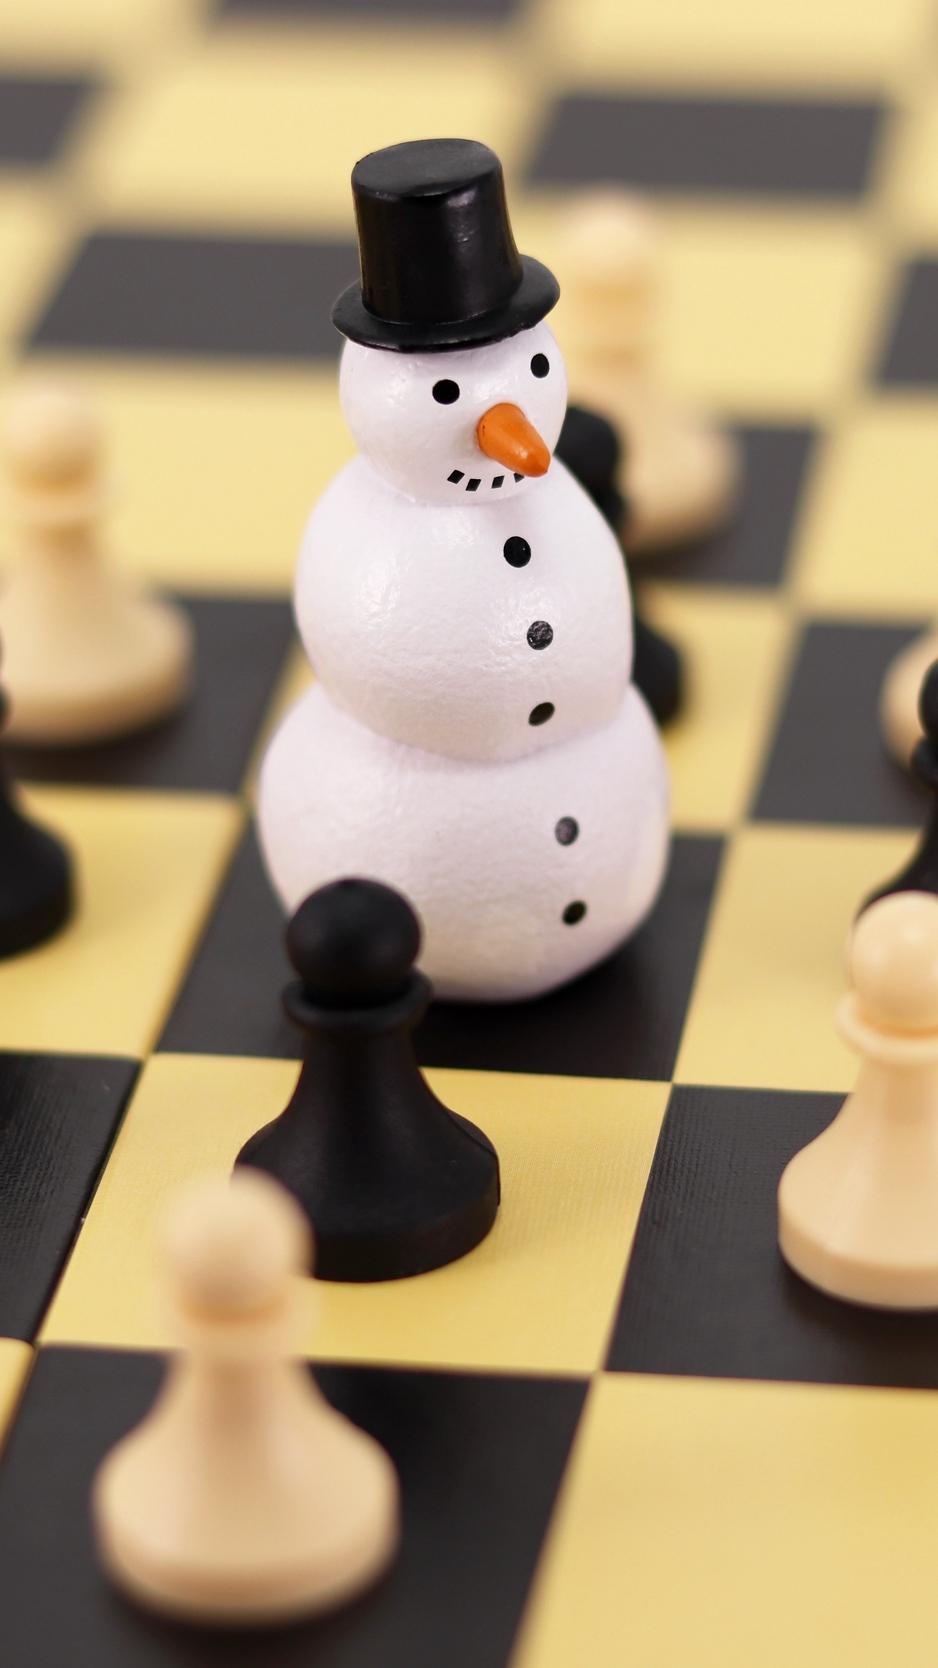 Download wallpaper 938x1668 chess, snowman, figures, pawns